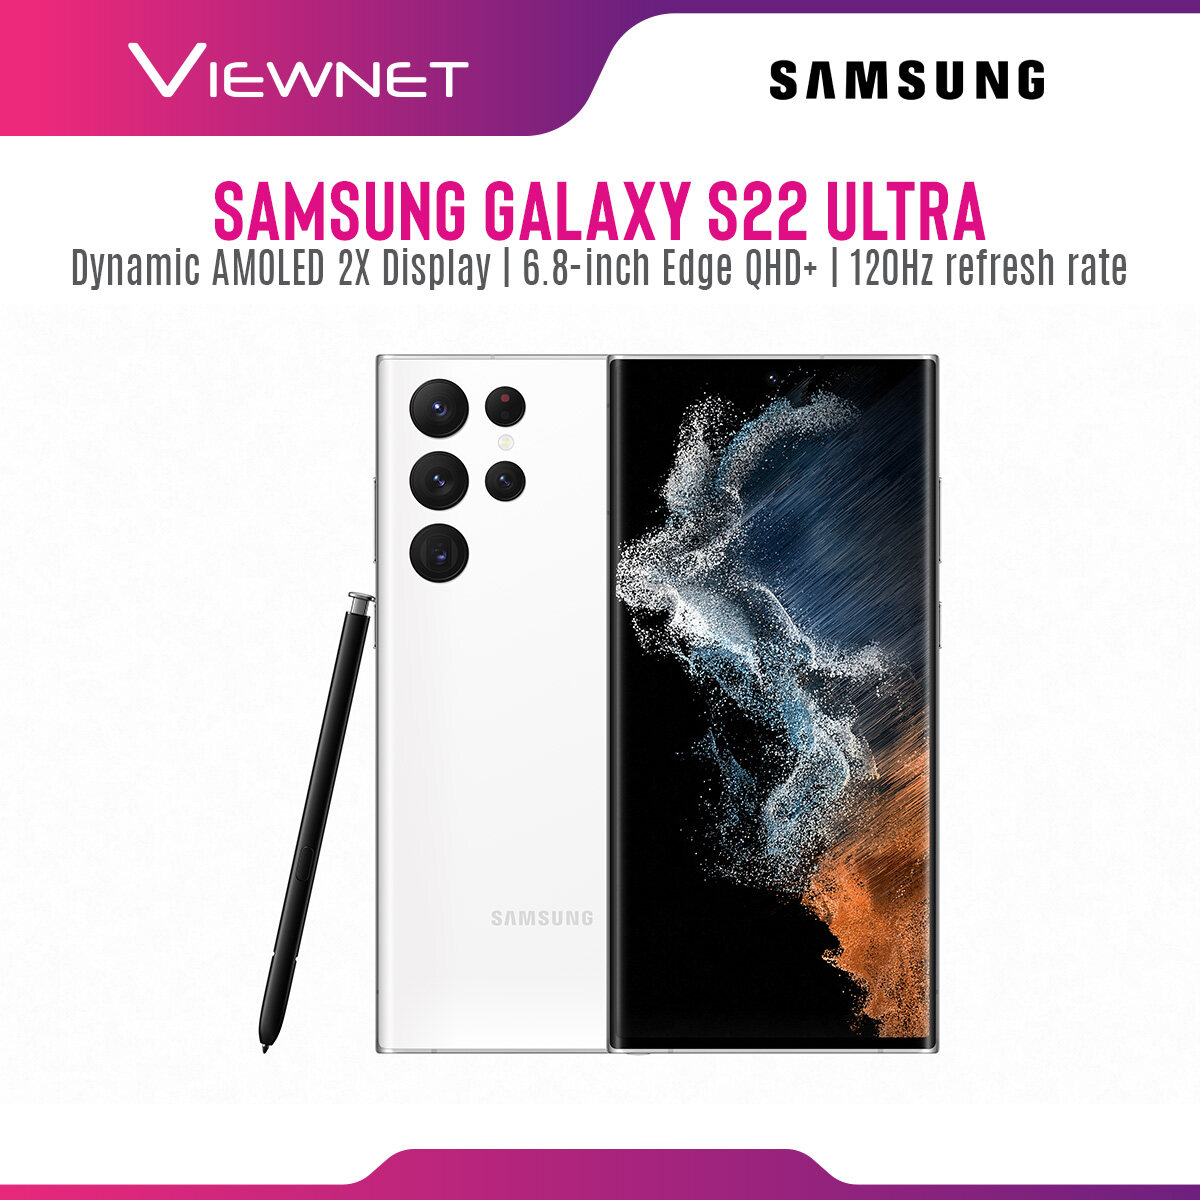 [PRE-ORDER] Samsung Galaxy S22 Ultra 5G Smartphone with Dynamic AMOLED 2X Display, 6.8-inch Edge QHD+, 120Hz Refresh Rate, 5500mAh Battery (ETA : 2022-03-03)